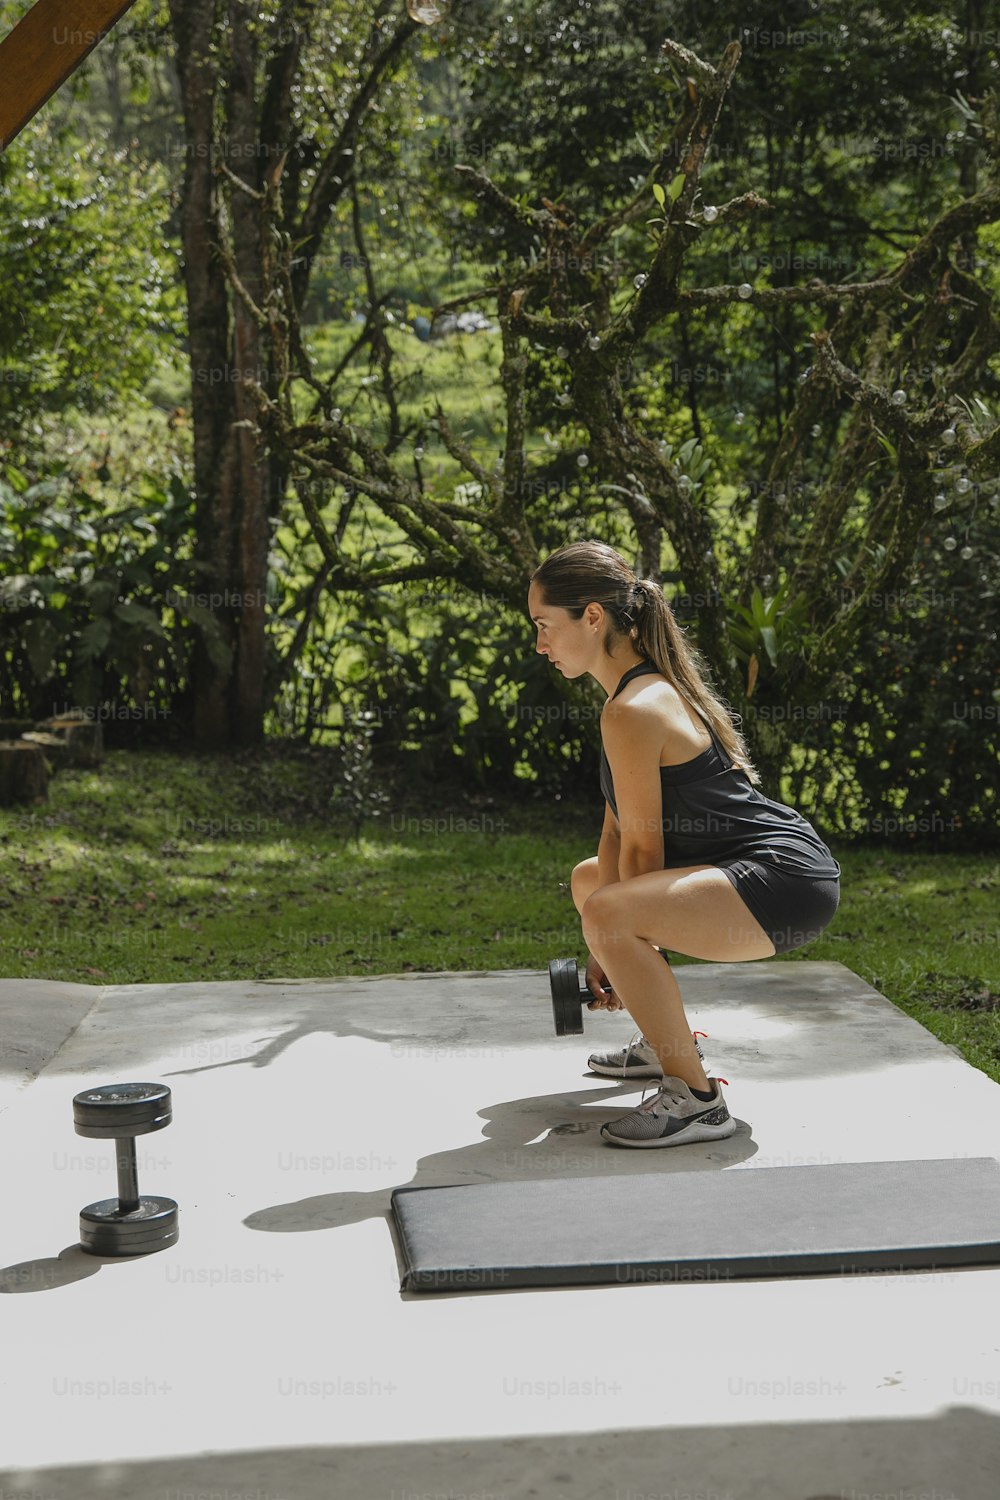 a woman doing squats on a yoga mat